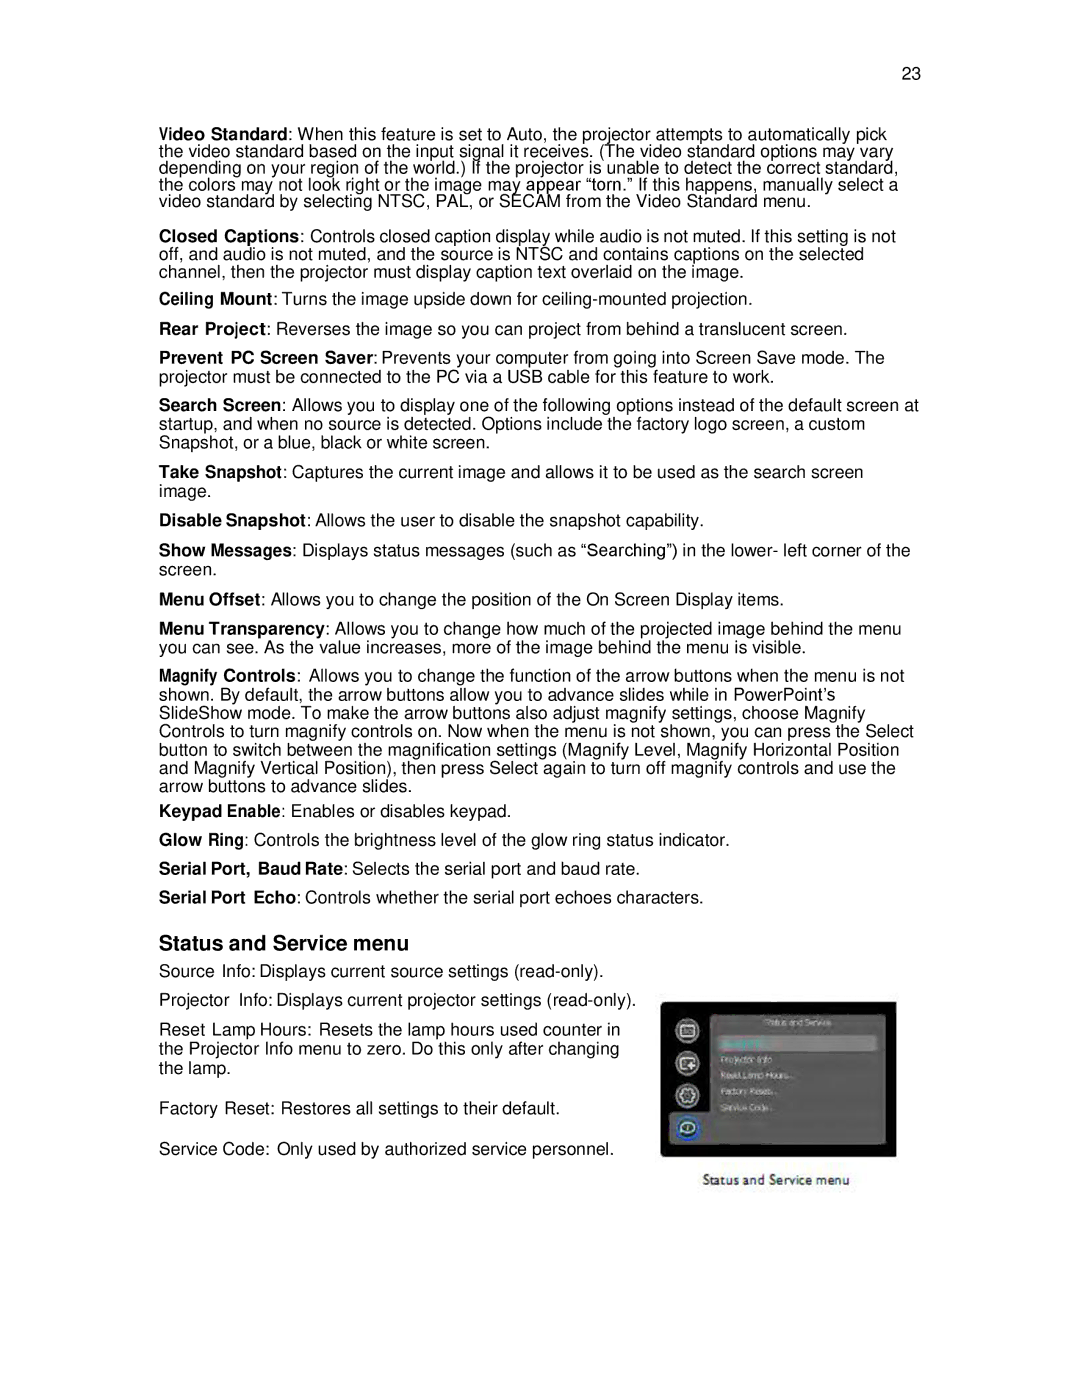 Knoll Systems HDP6000 user manual Status and Service menu 